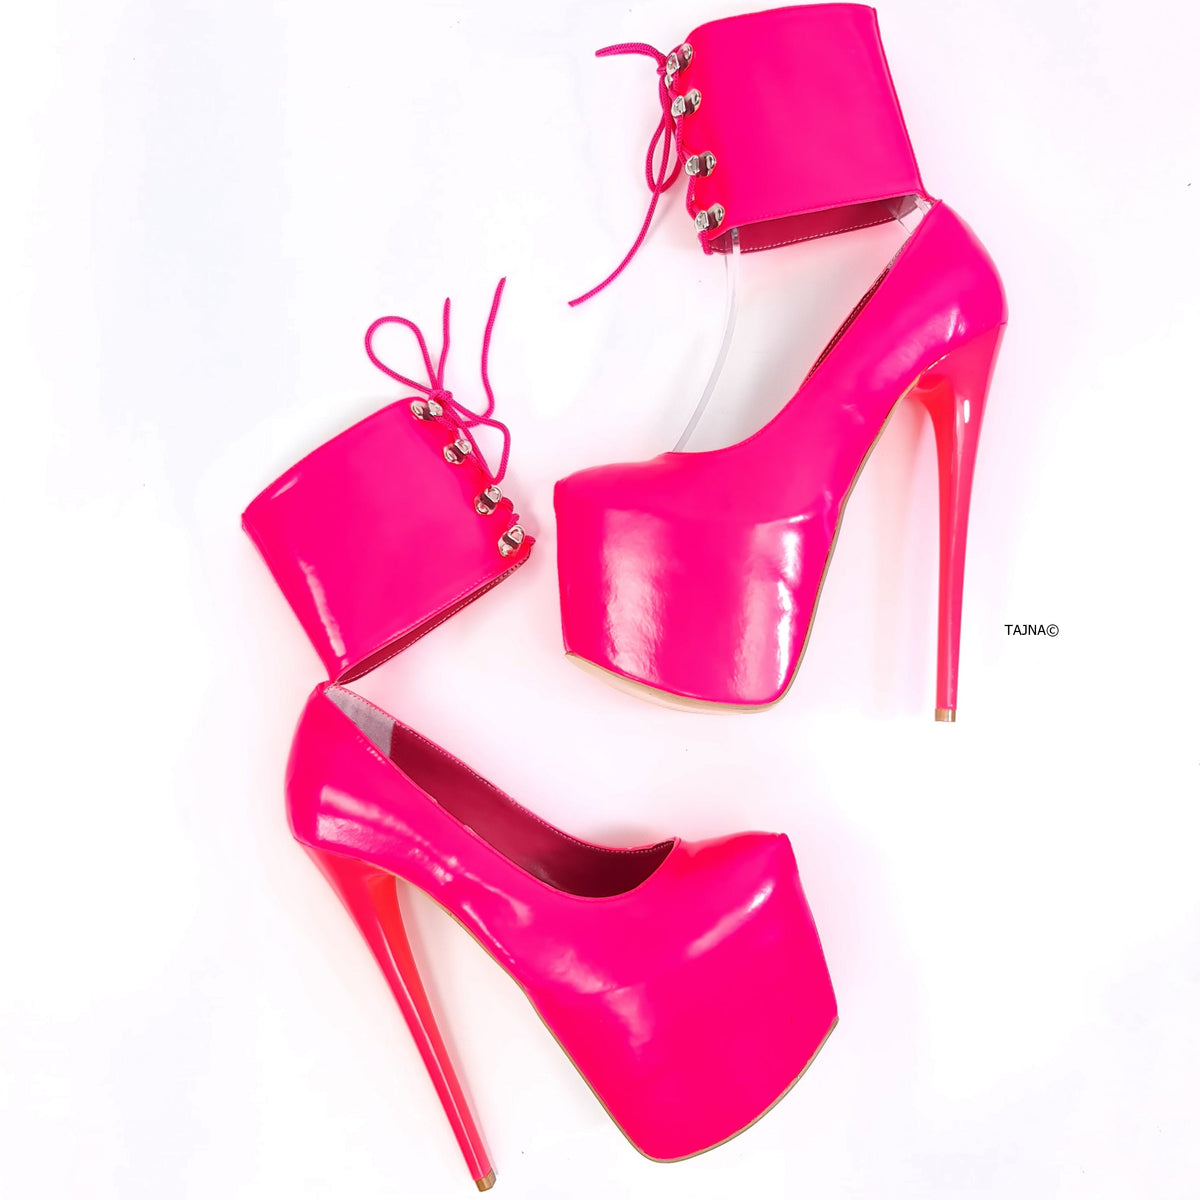 Ankle Cuff Pink High Heel Bondage Shoes | Tajna Shoes